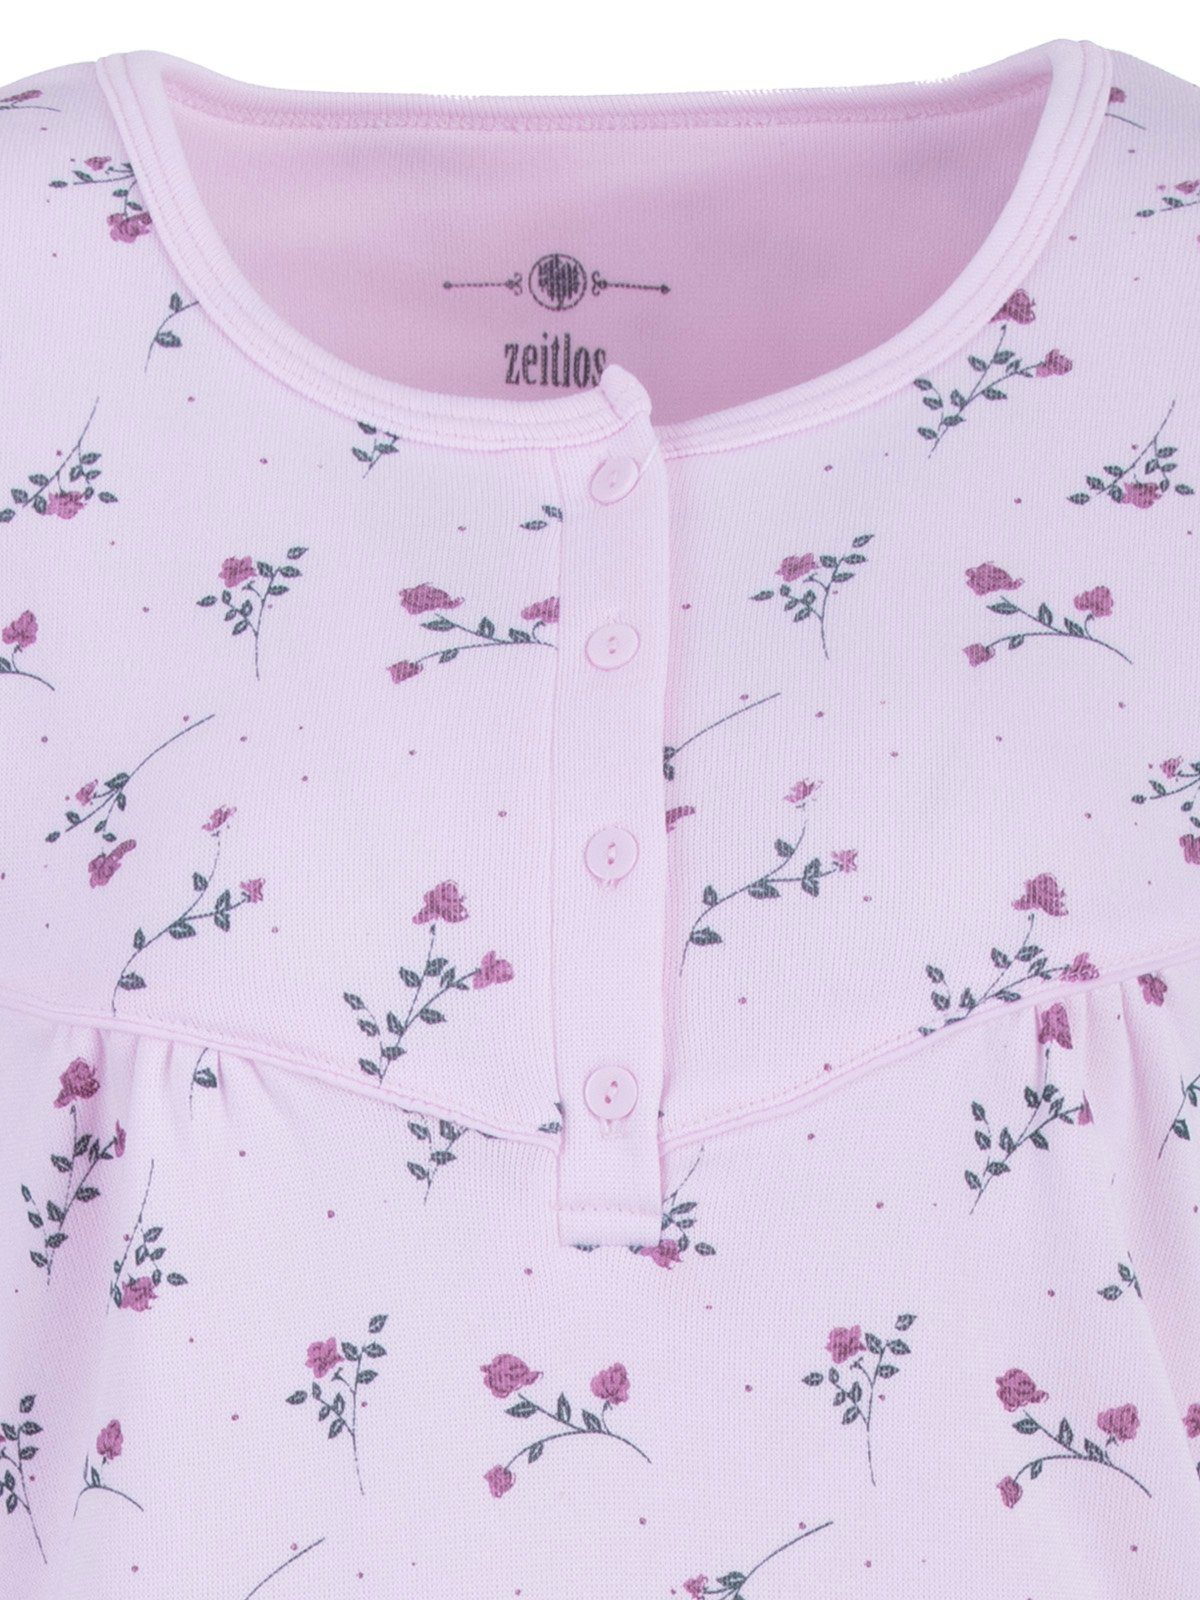 zeitlos Nachthemd Paspel Thermo - Nachthemd Blumen rosa